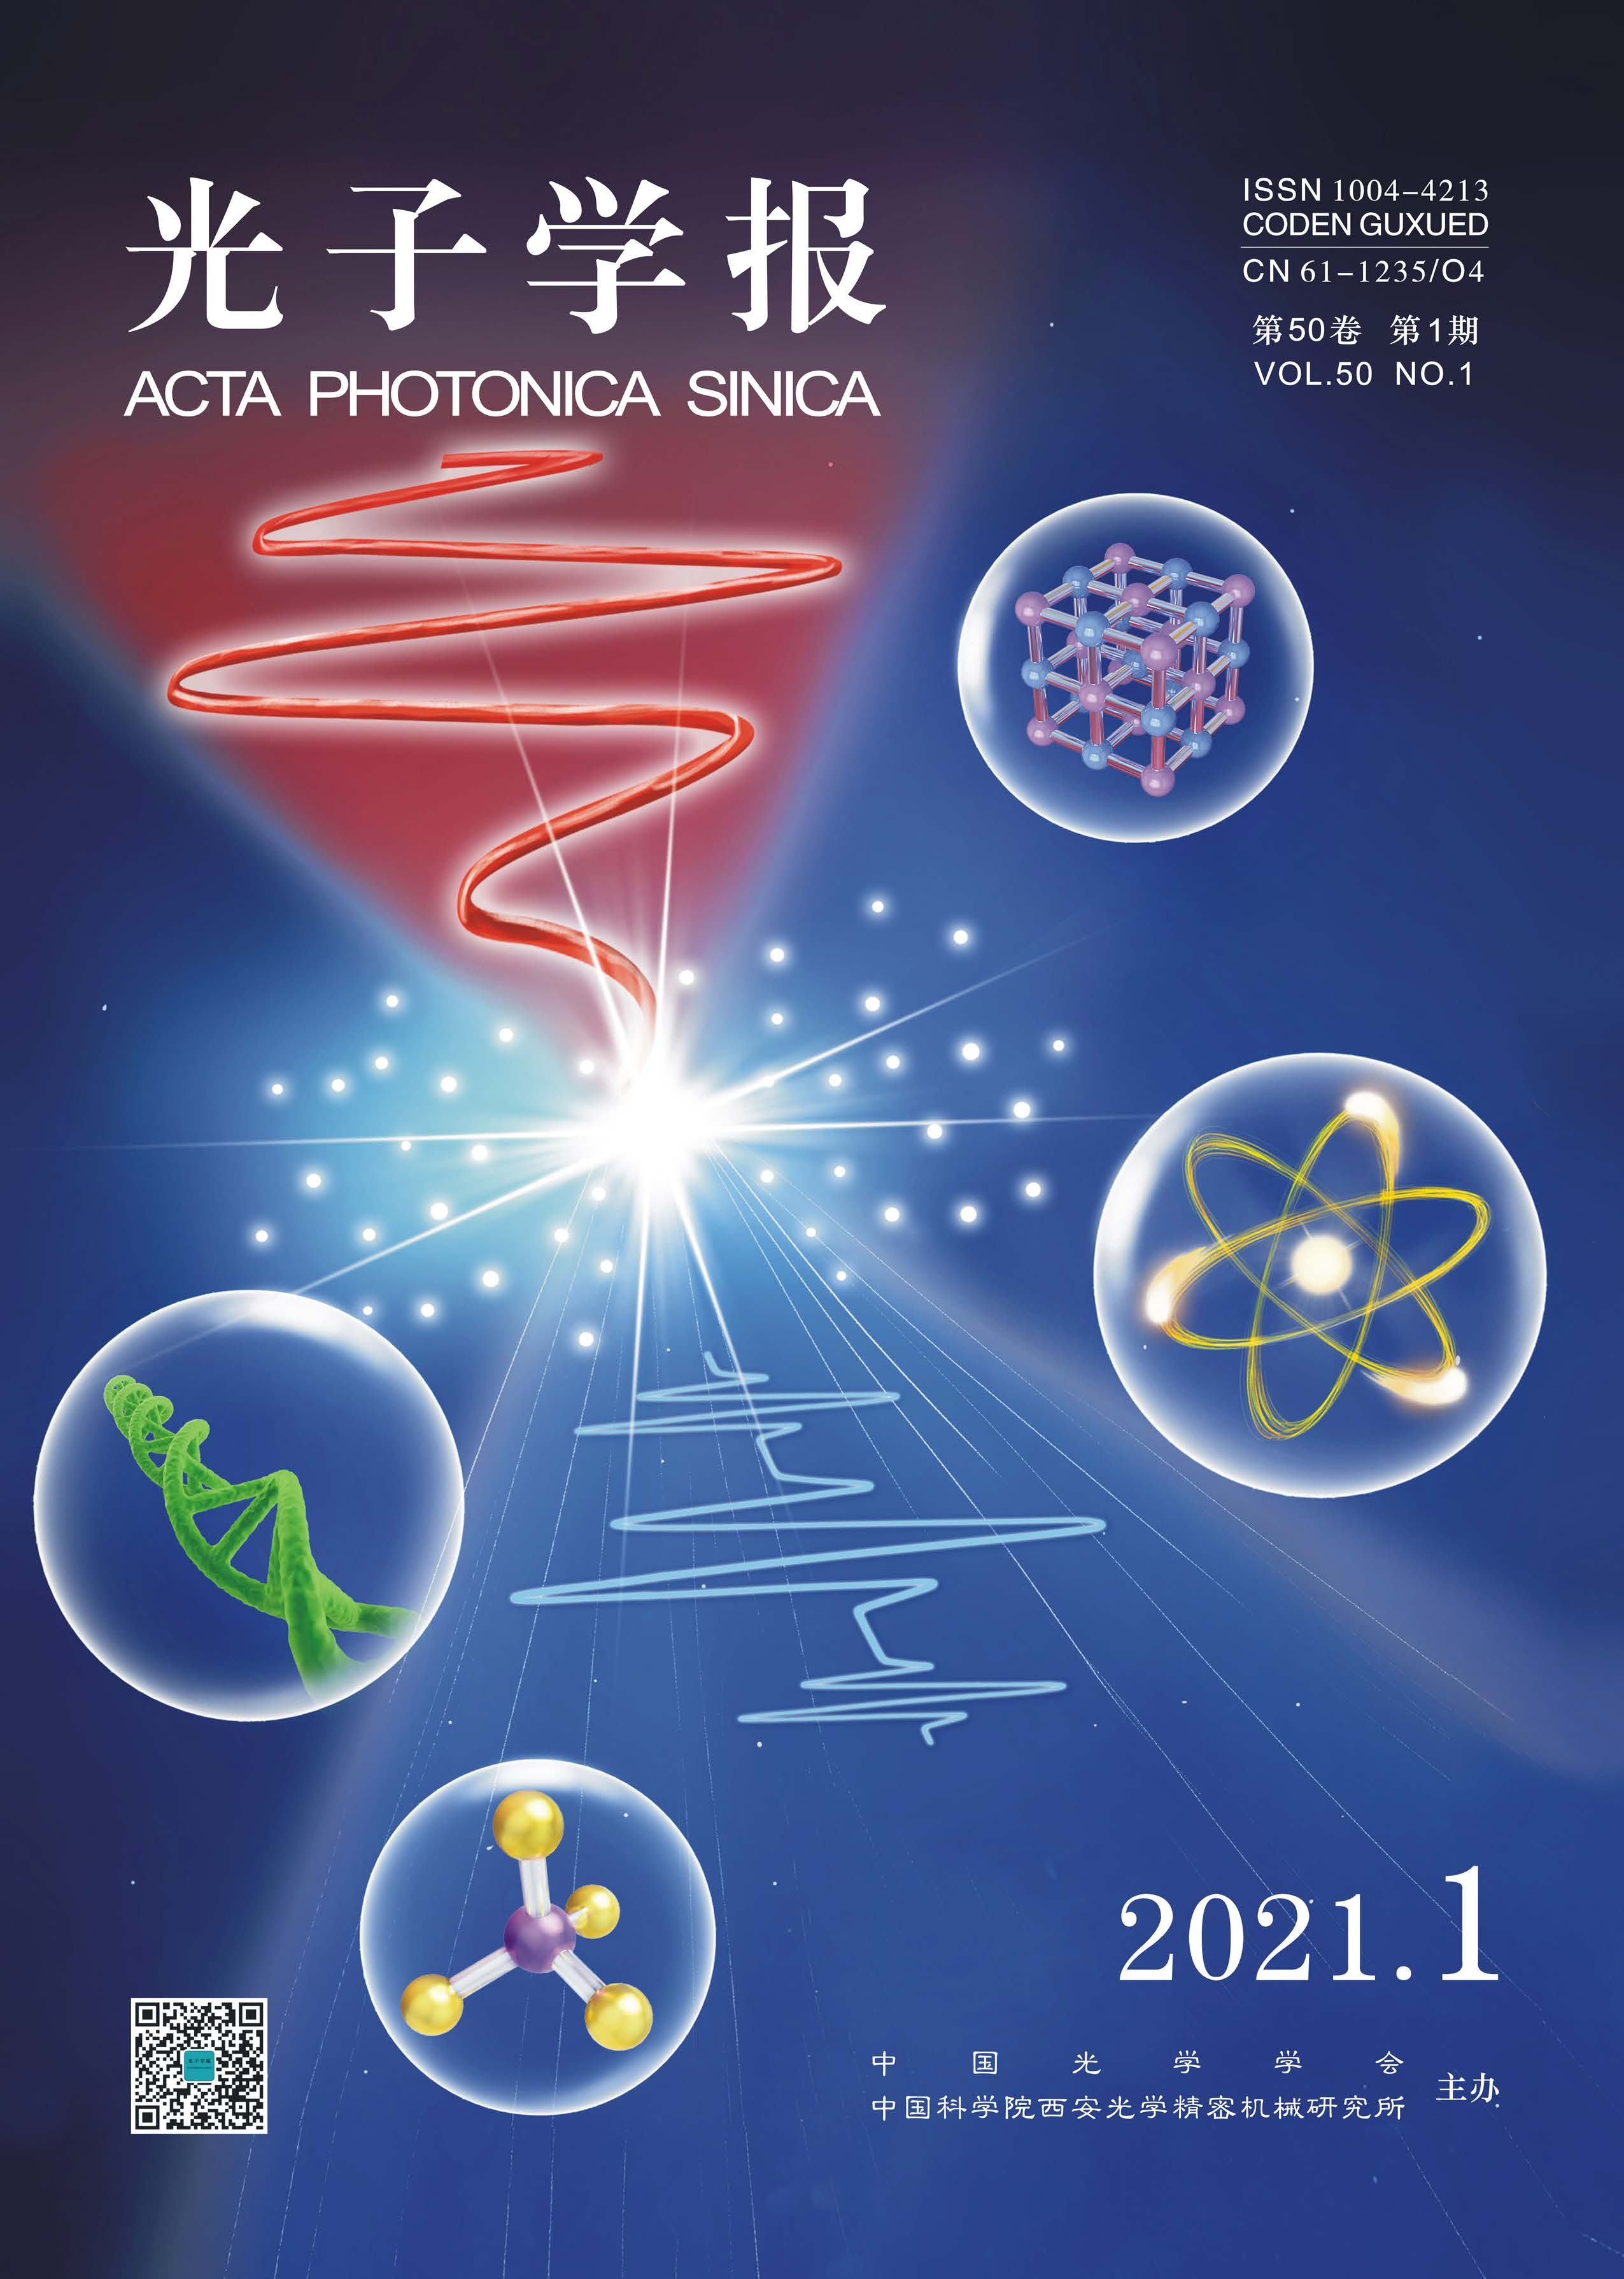 Acta Photonica Sinica